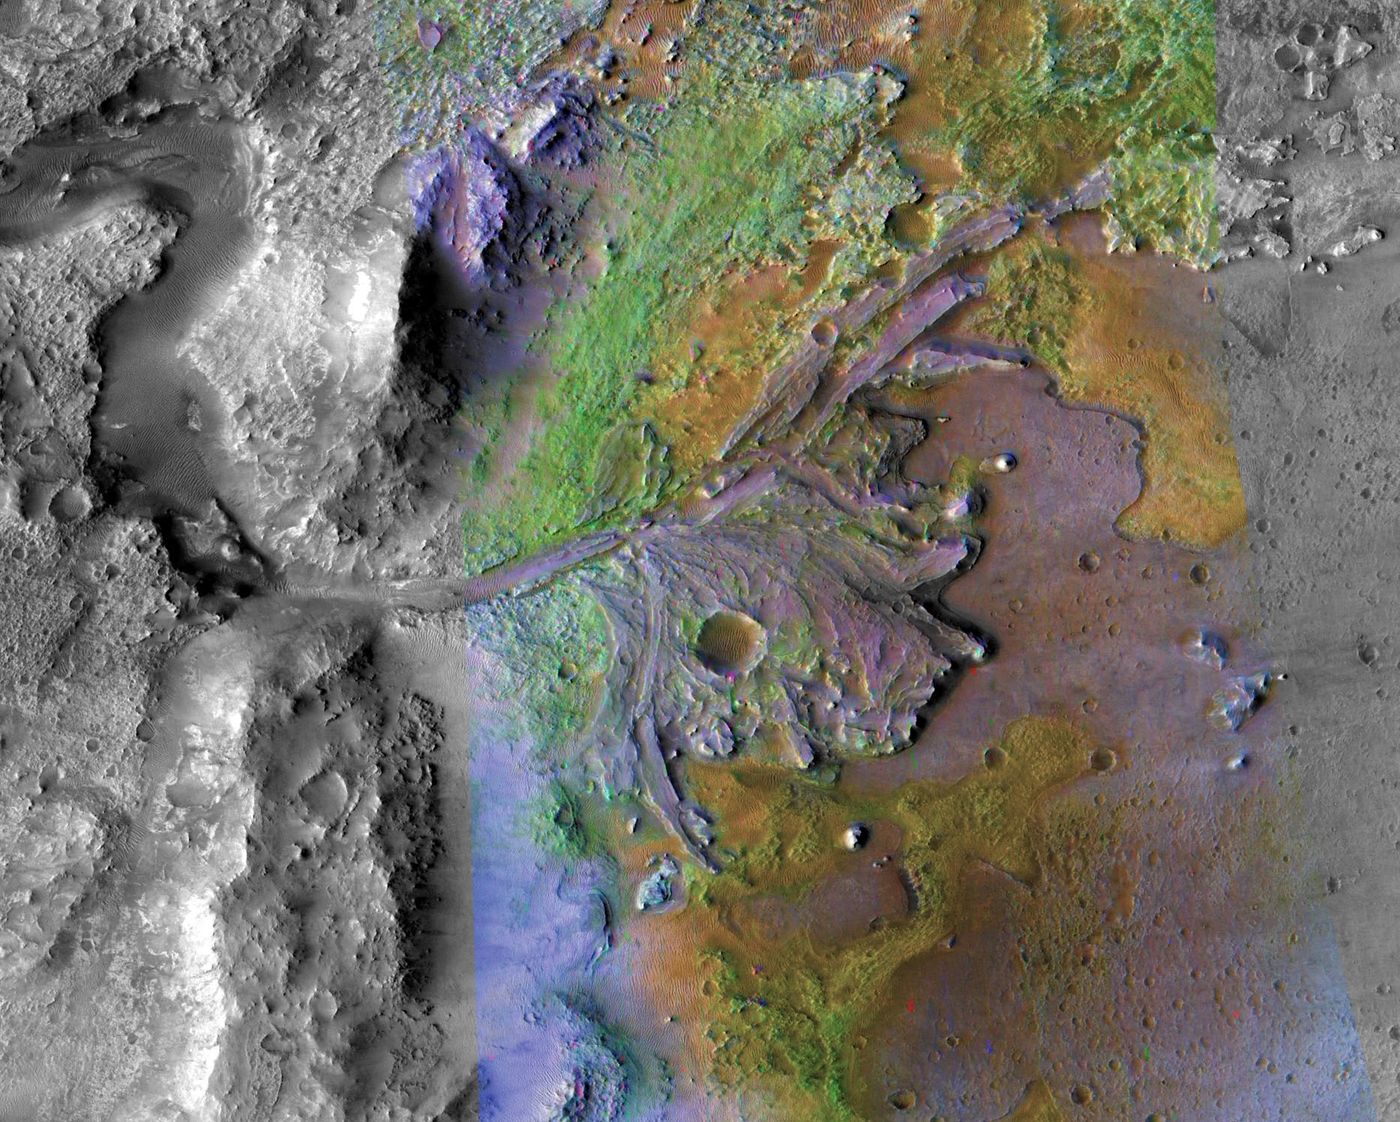 Meet Jezero Crater, the future landing site of the Mars 2020 rover.